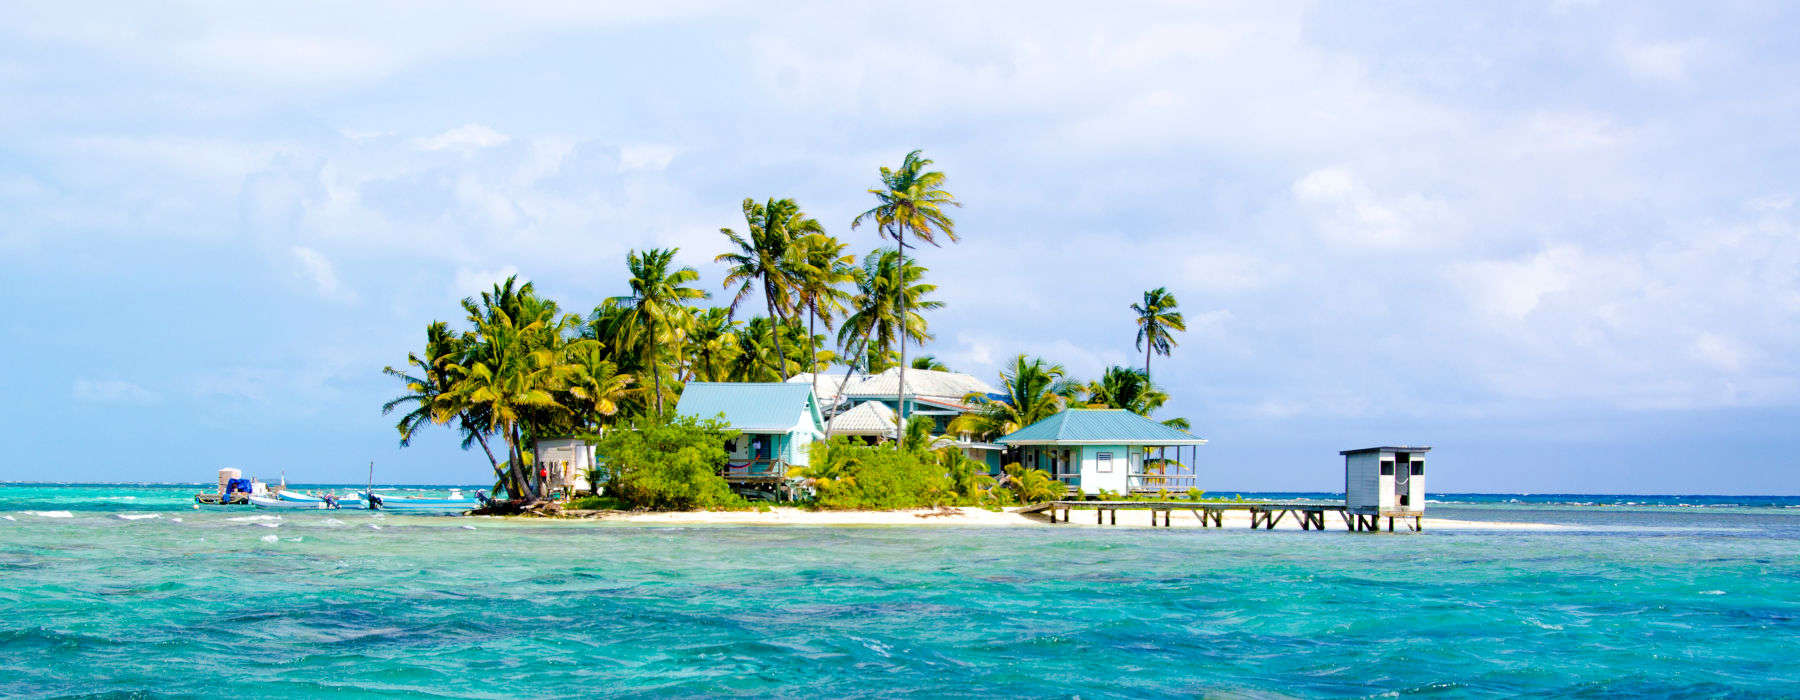  The Belizean Coast Holidays